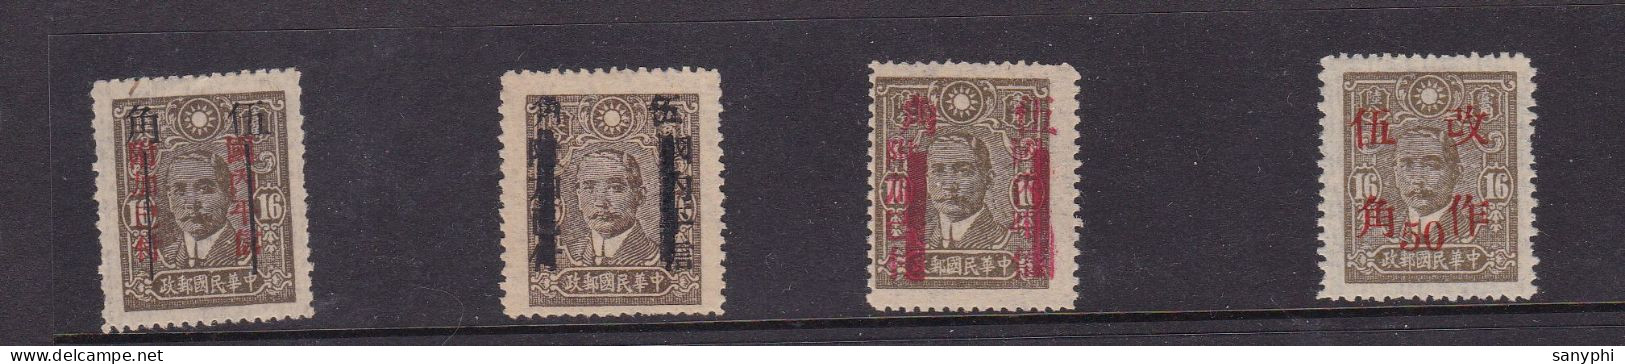 China Republic Dr Sun Ovpt Various Provinces Unused Stamps - 1912-1949 Republic